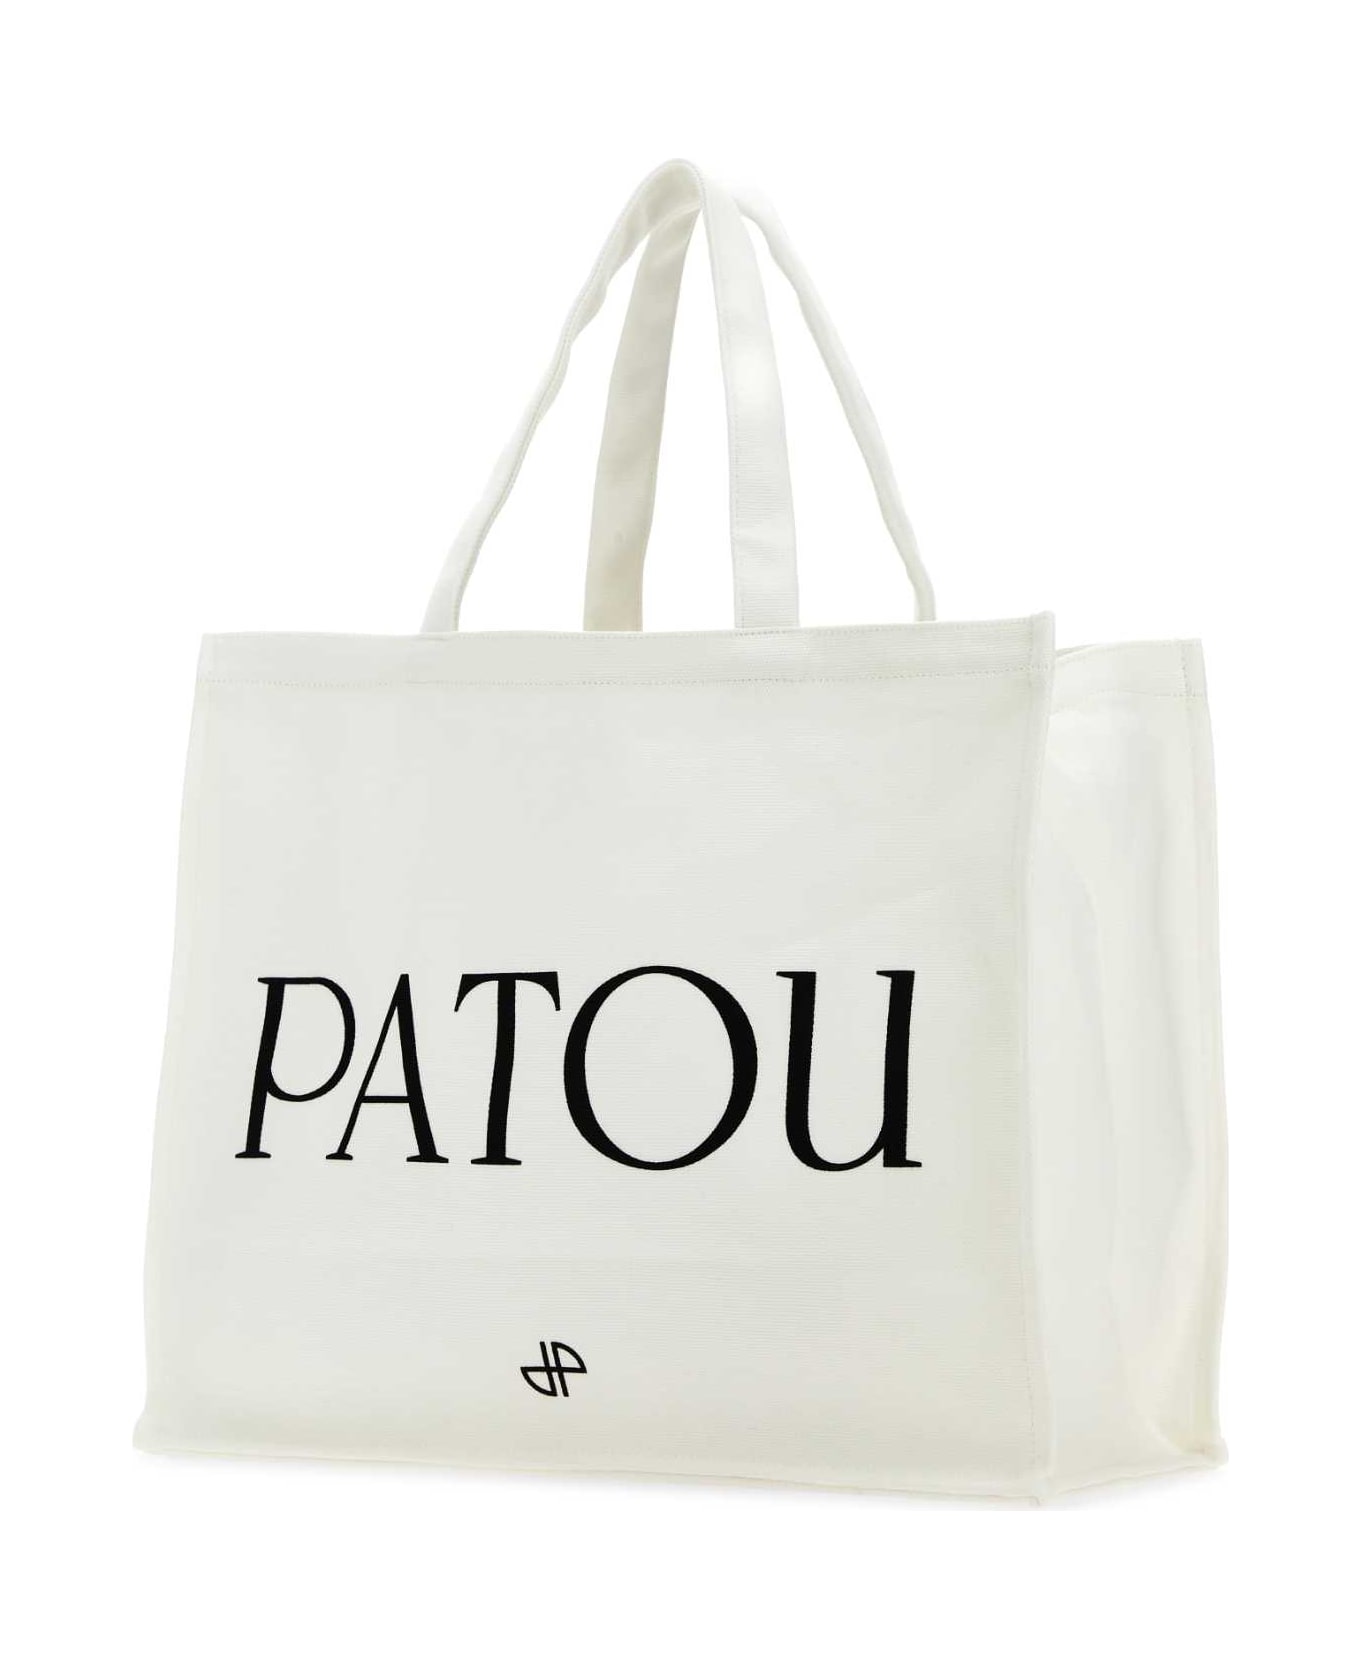 Patou White Cotton Shopping Bag - 090C